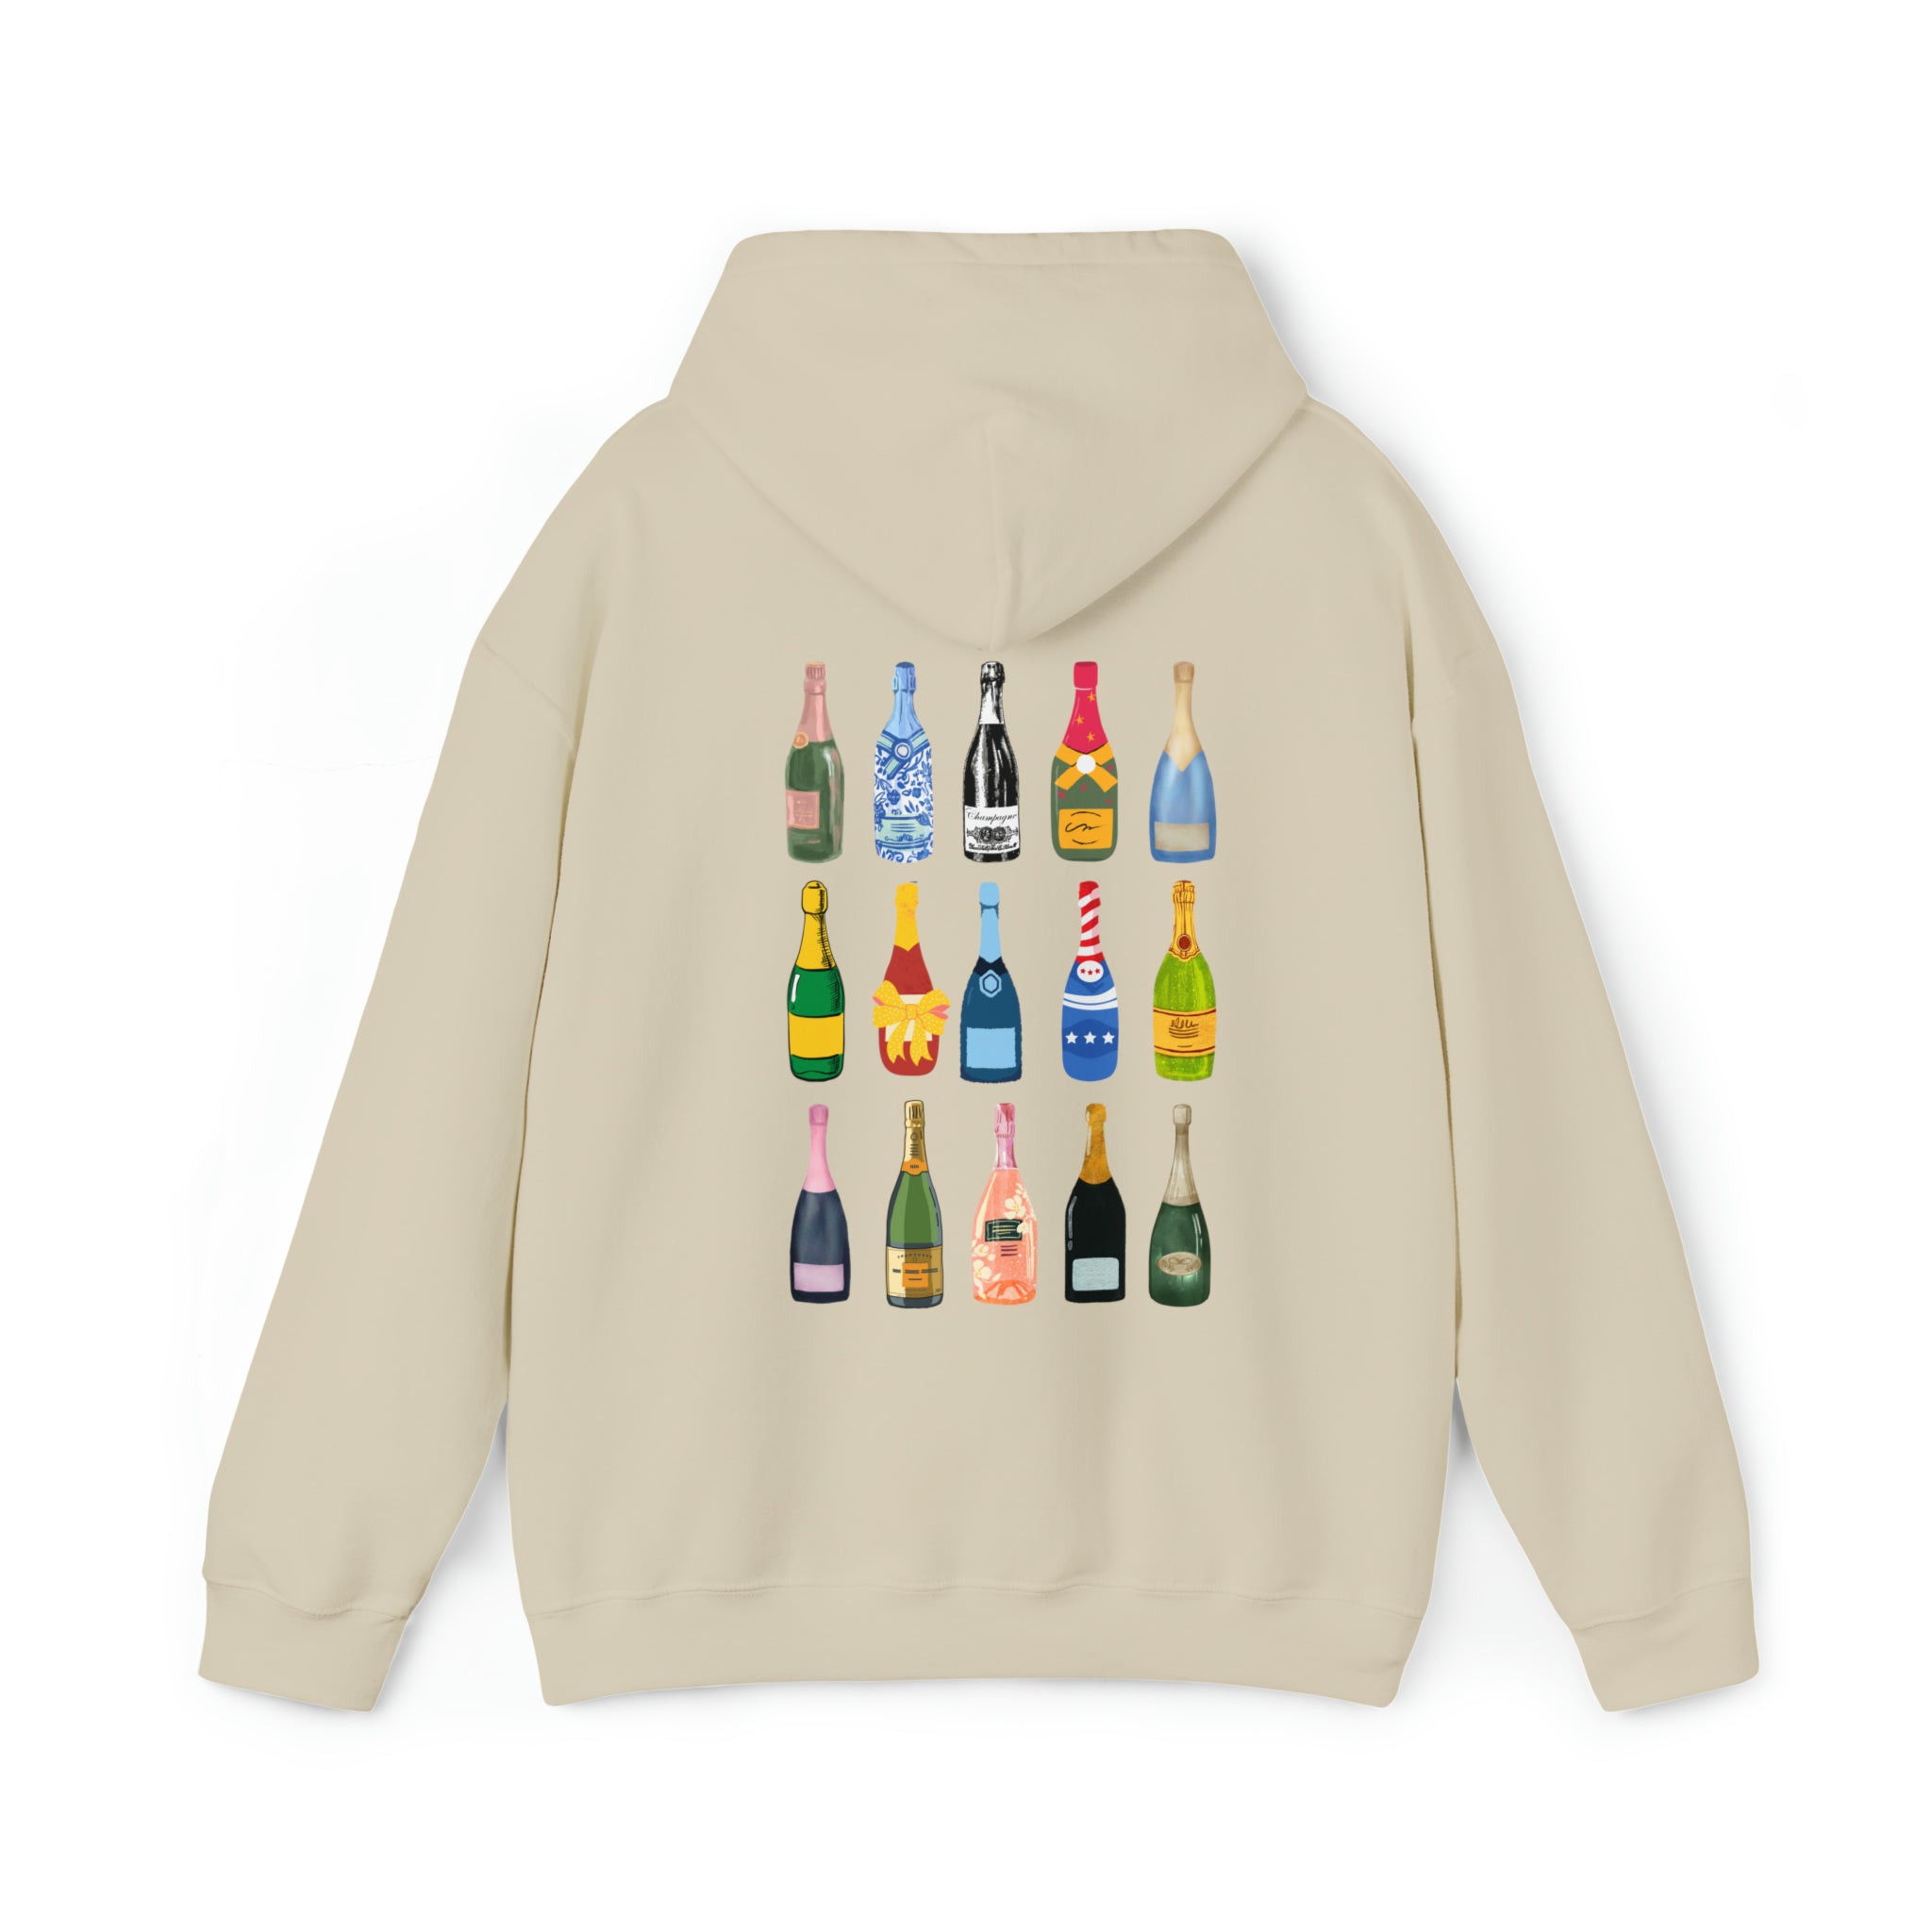 Champagne Hoodie Sweatshirt. by GS Print shoppe